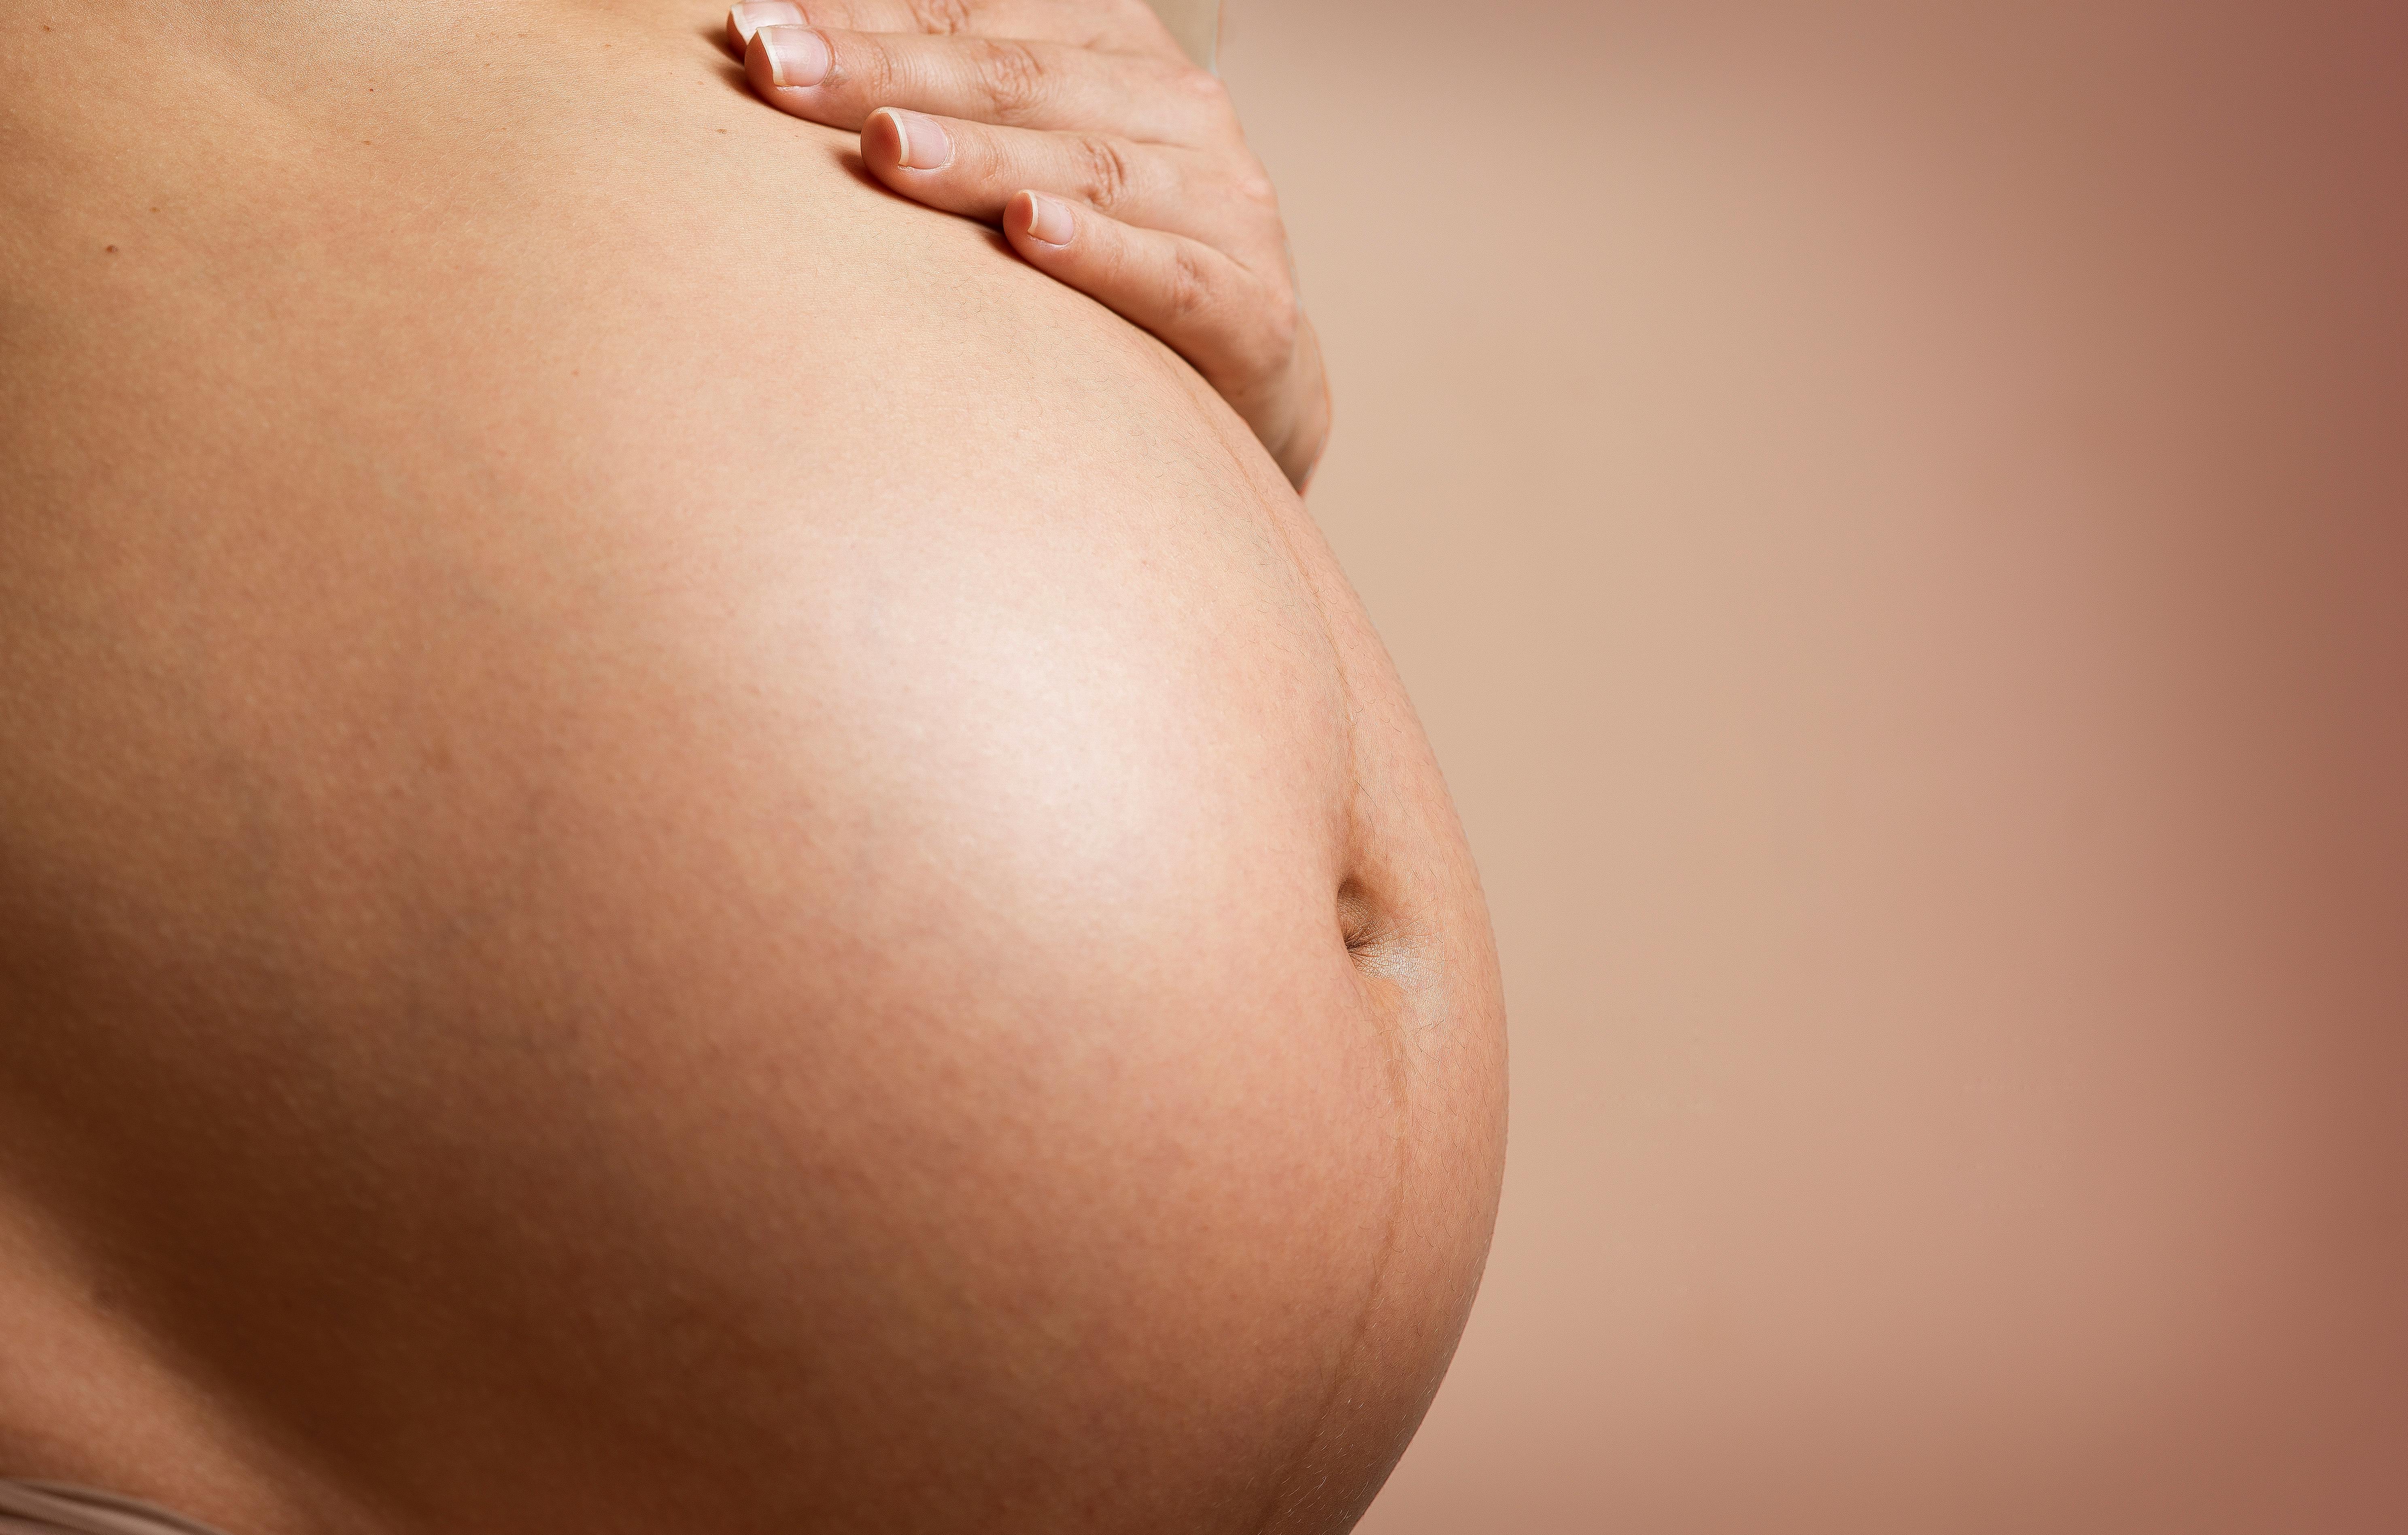 Maternity Background Images - Free Download on Freepik